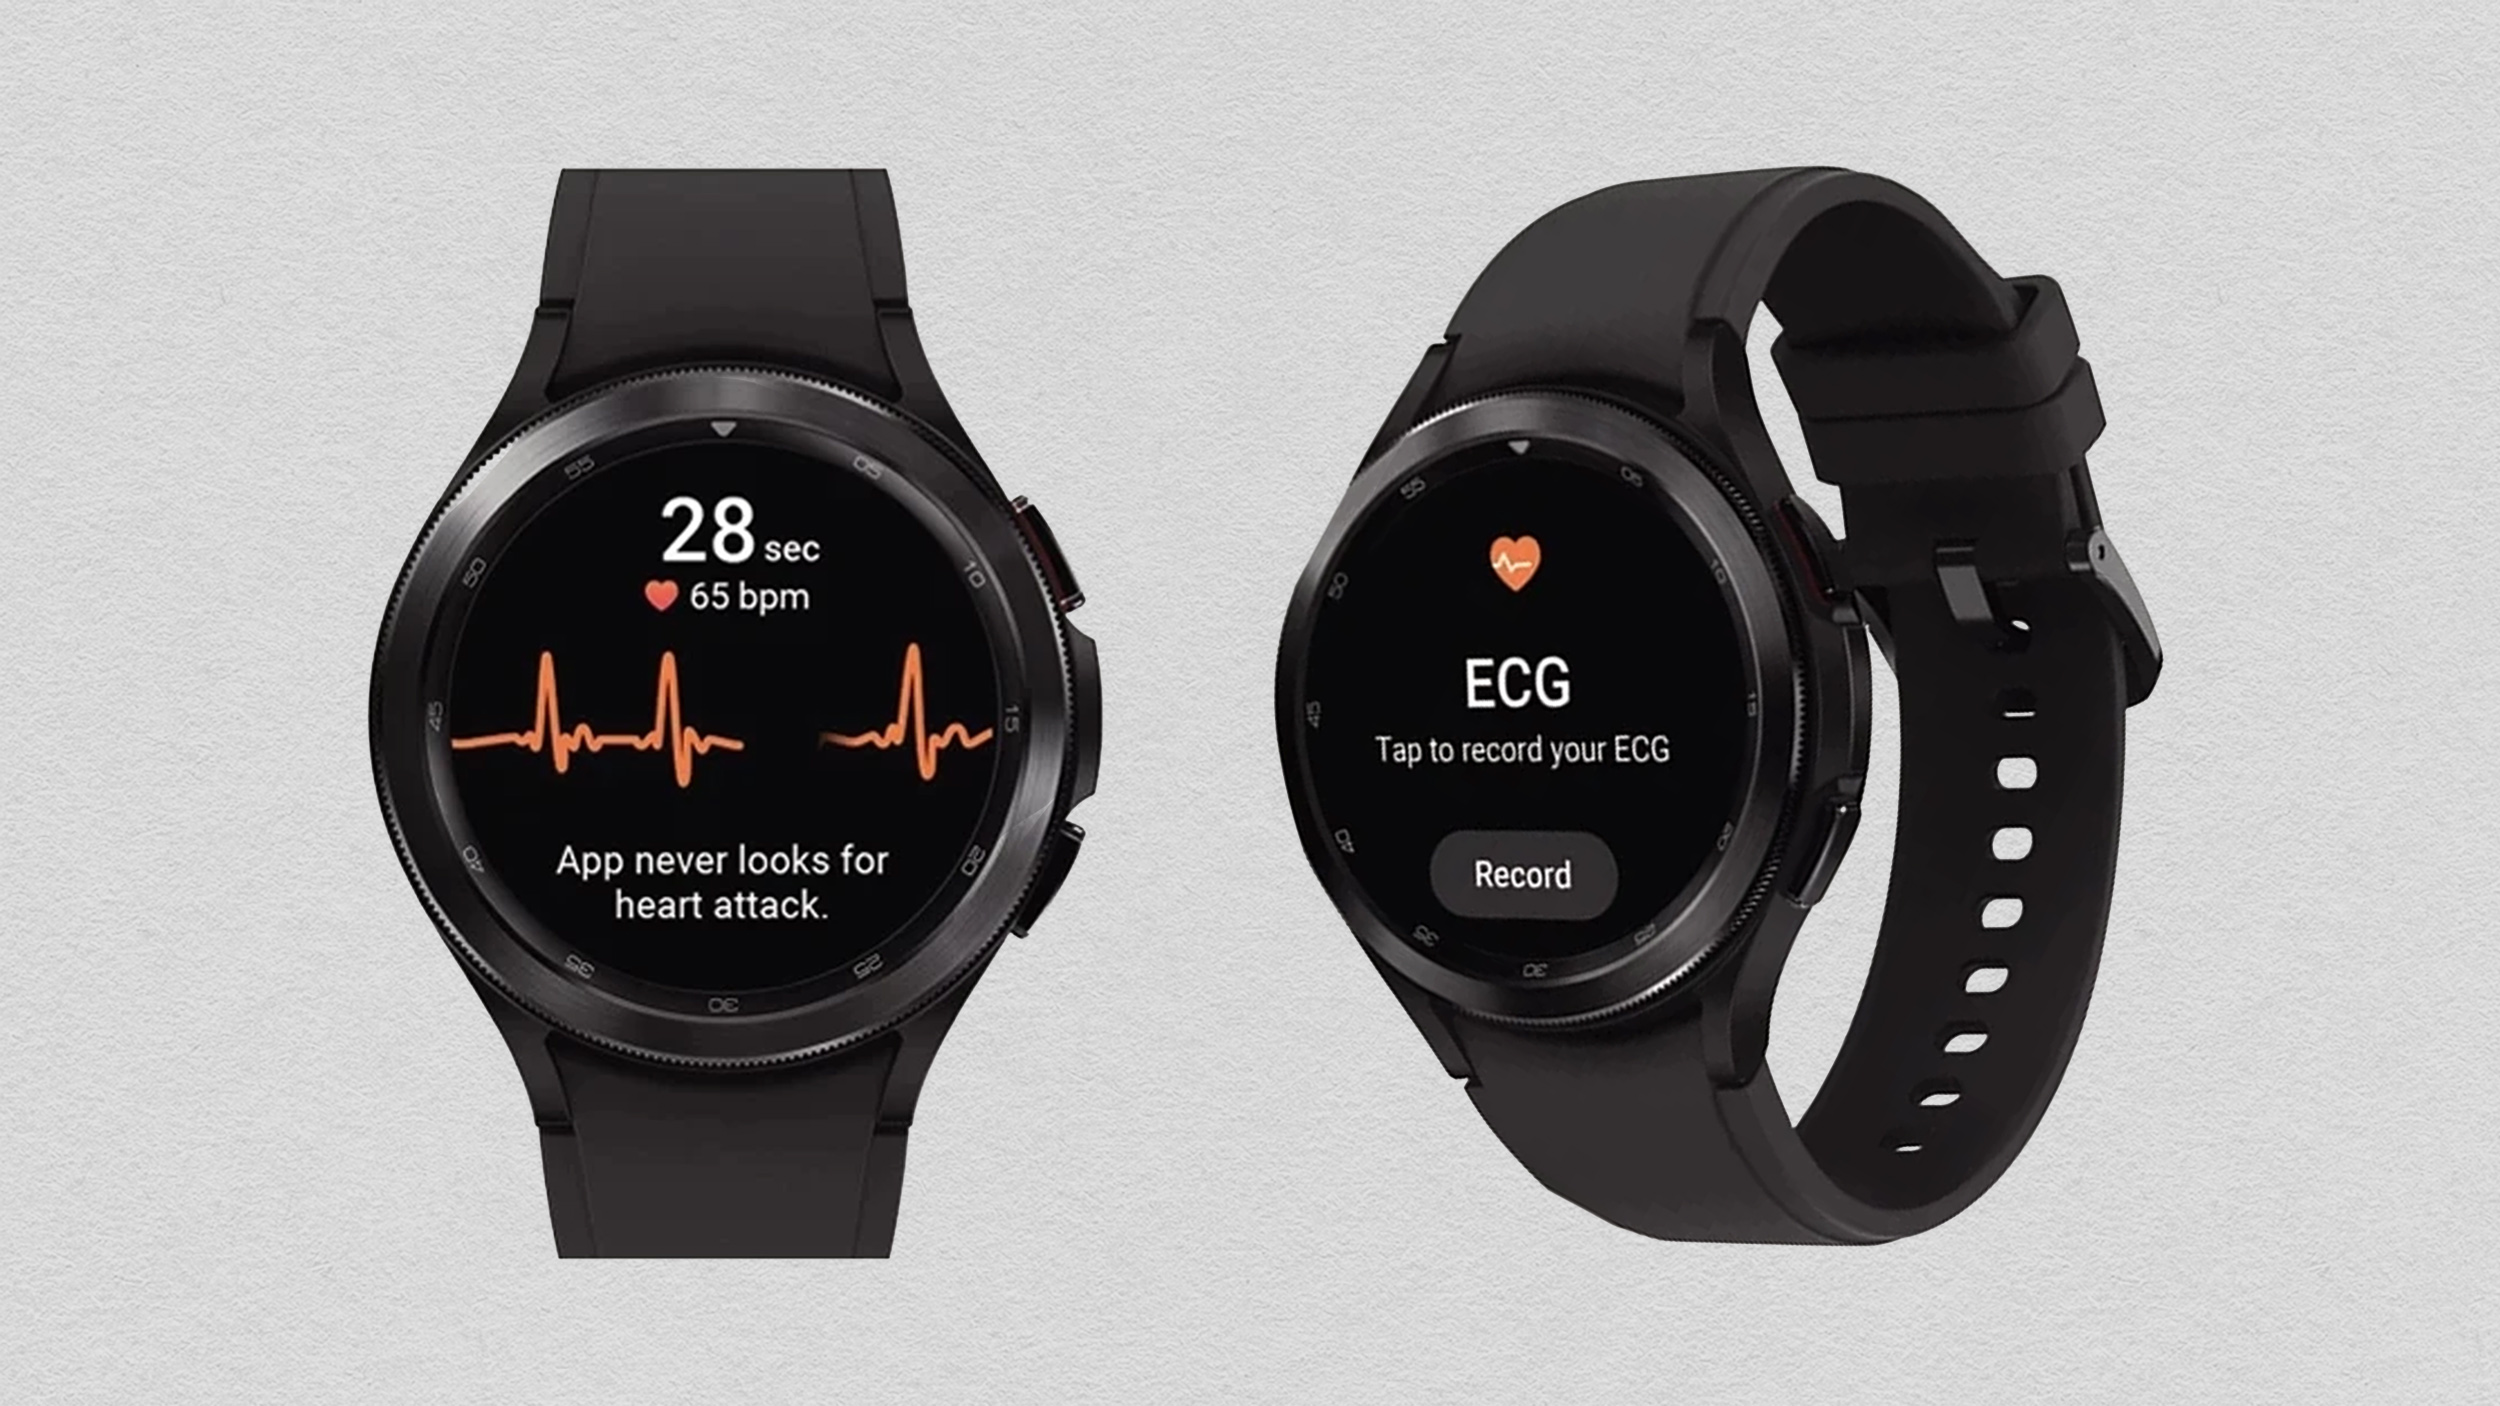 Xiaomi redmi note 3 smartwatch with blood pressure device integration.